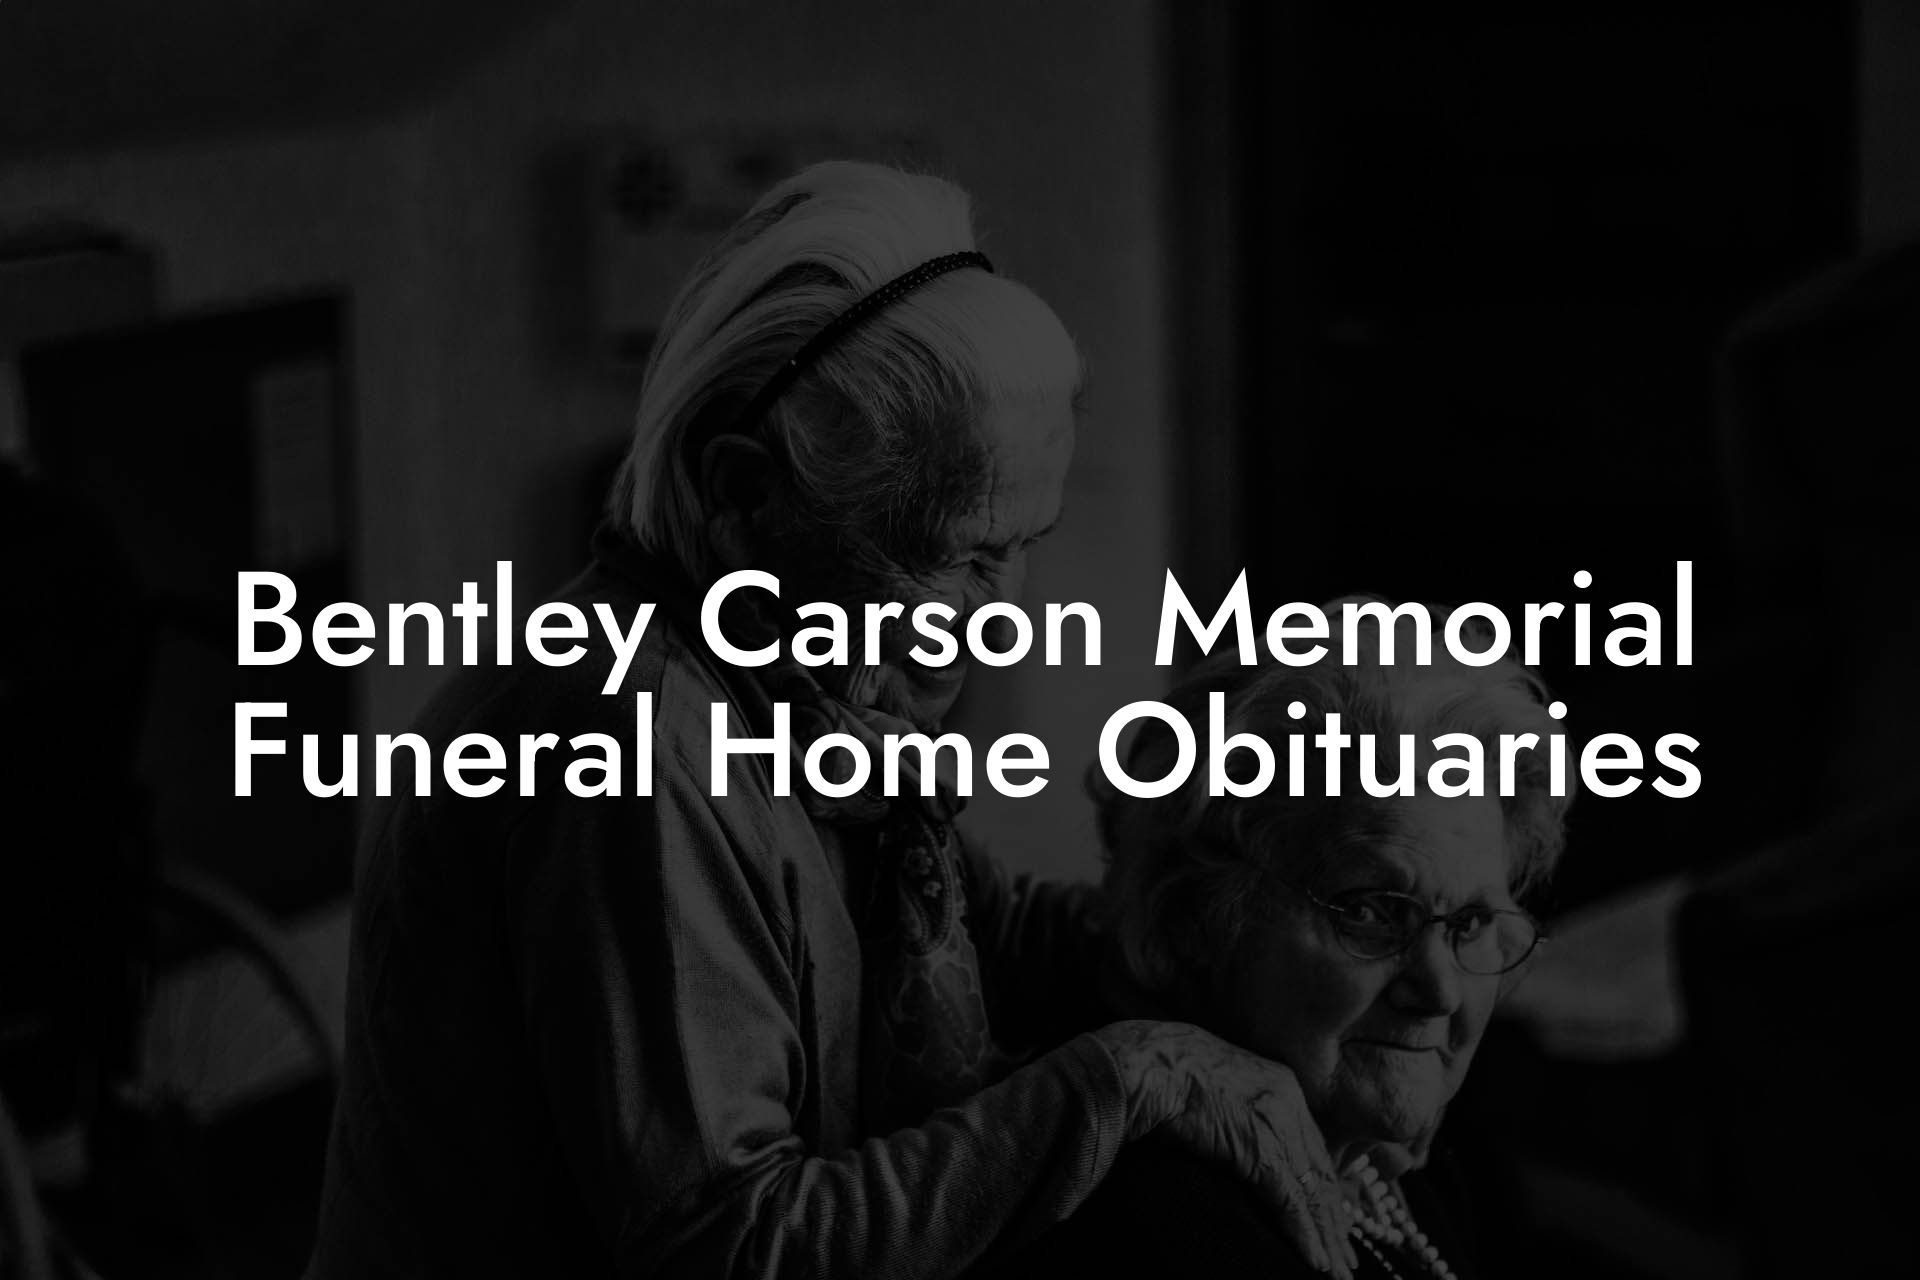 Bentley Carson Memorial Funeral Home Obituaries